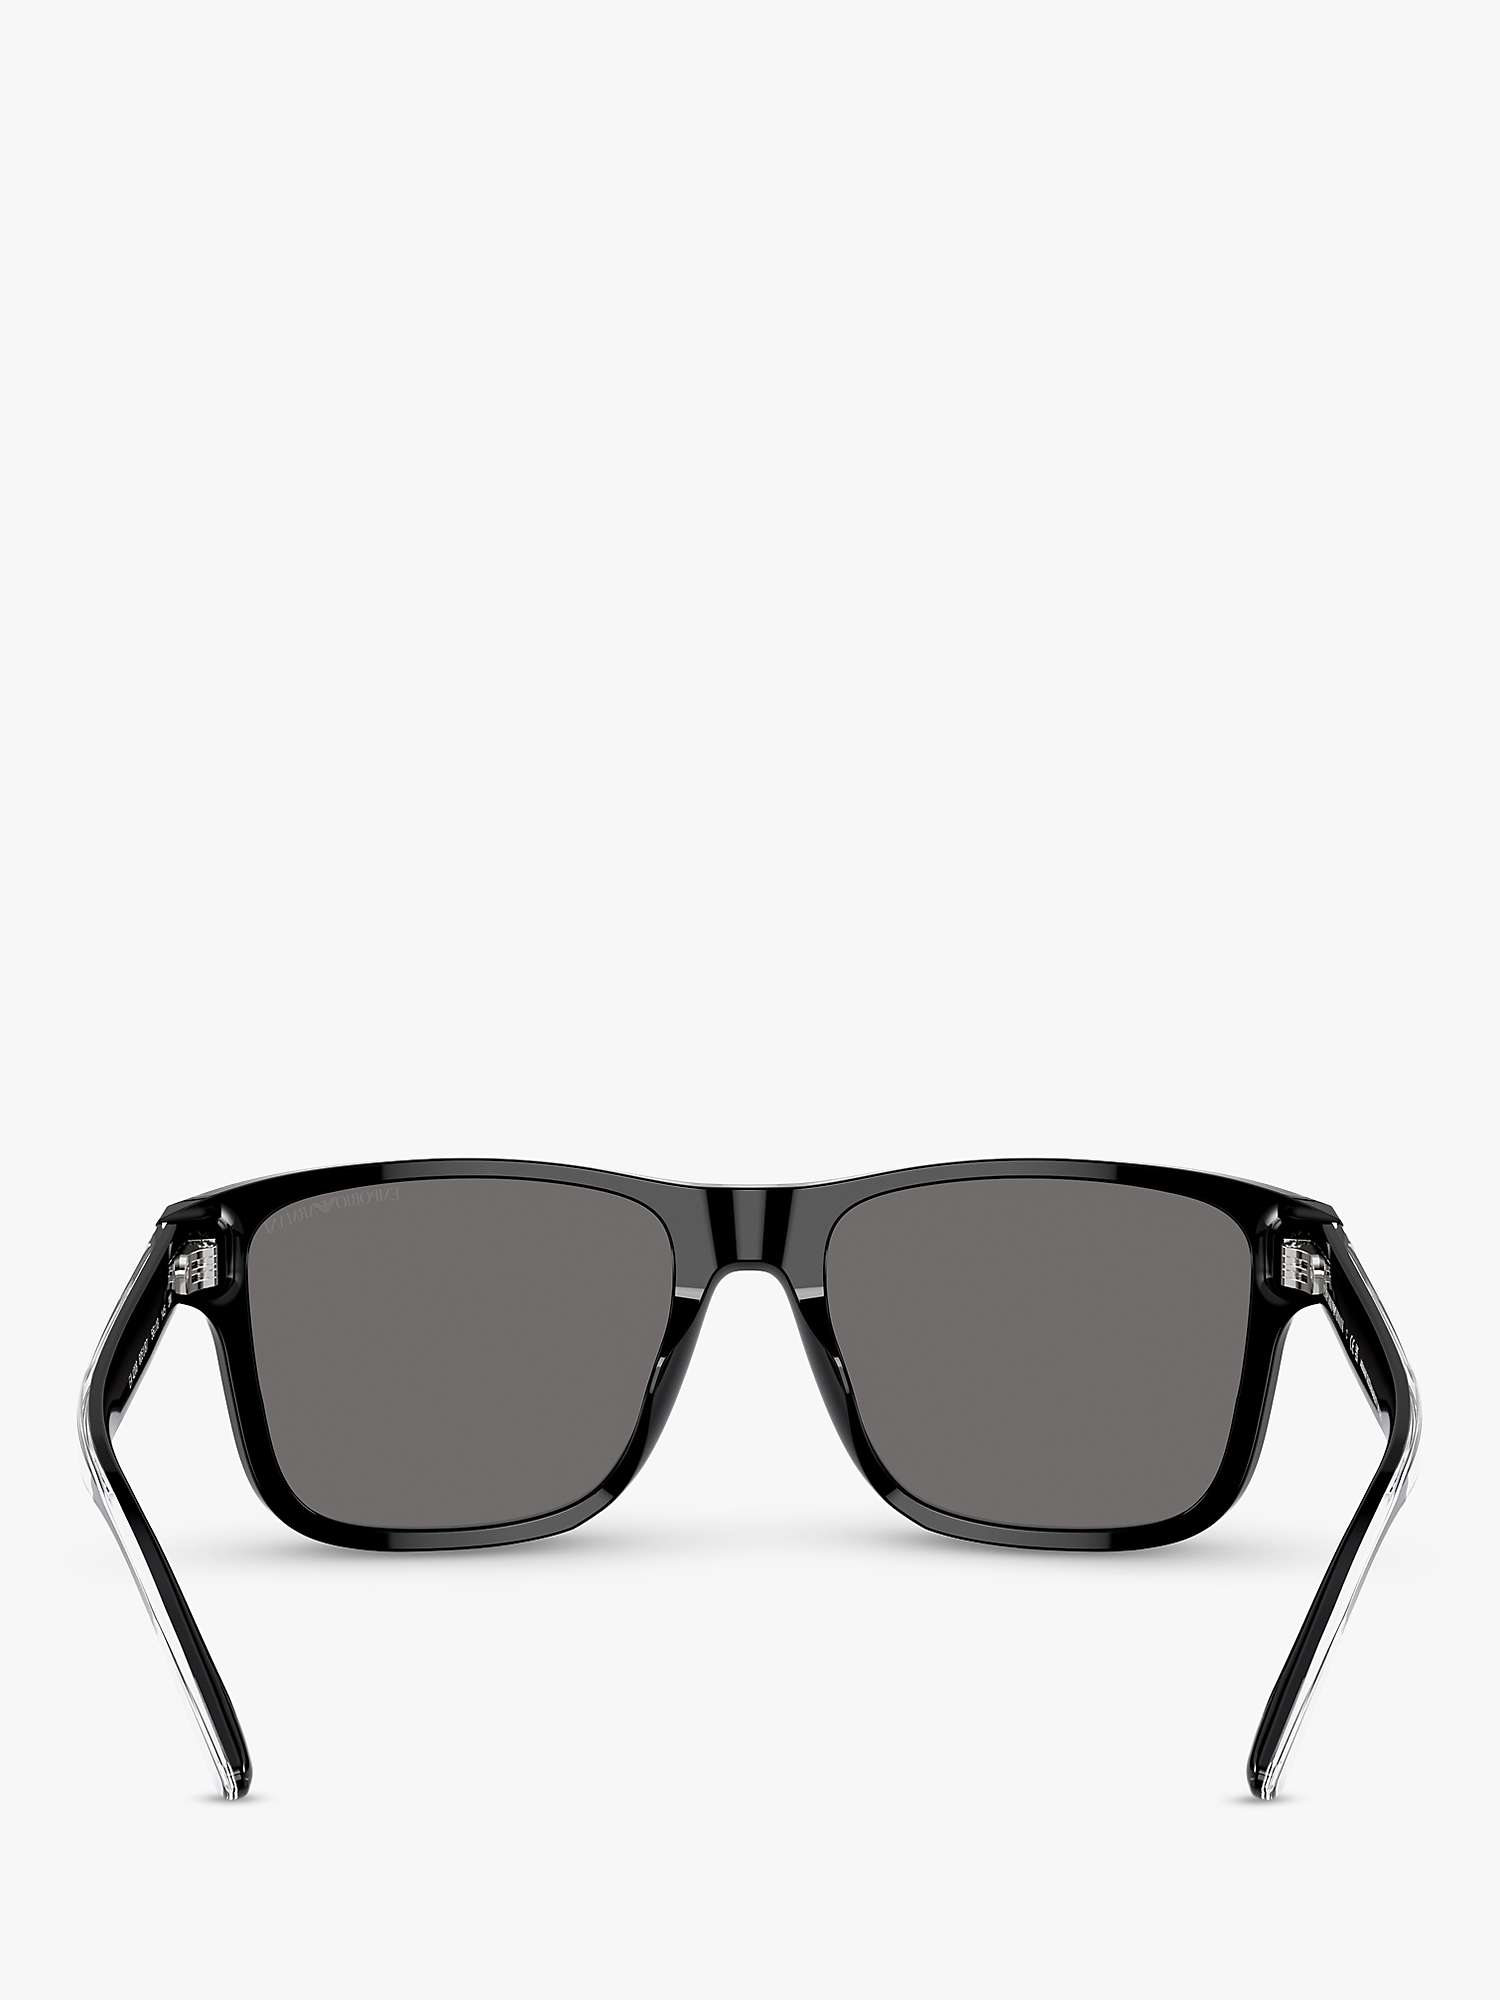 Buy Emporio Armani EA4208 Men's Polarised D-Frame Sunglasses, Shiny Black on Top Crystal/Grey Online at johnlewis.com